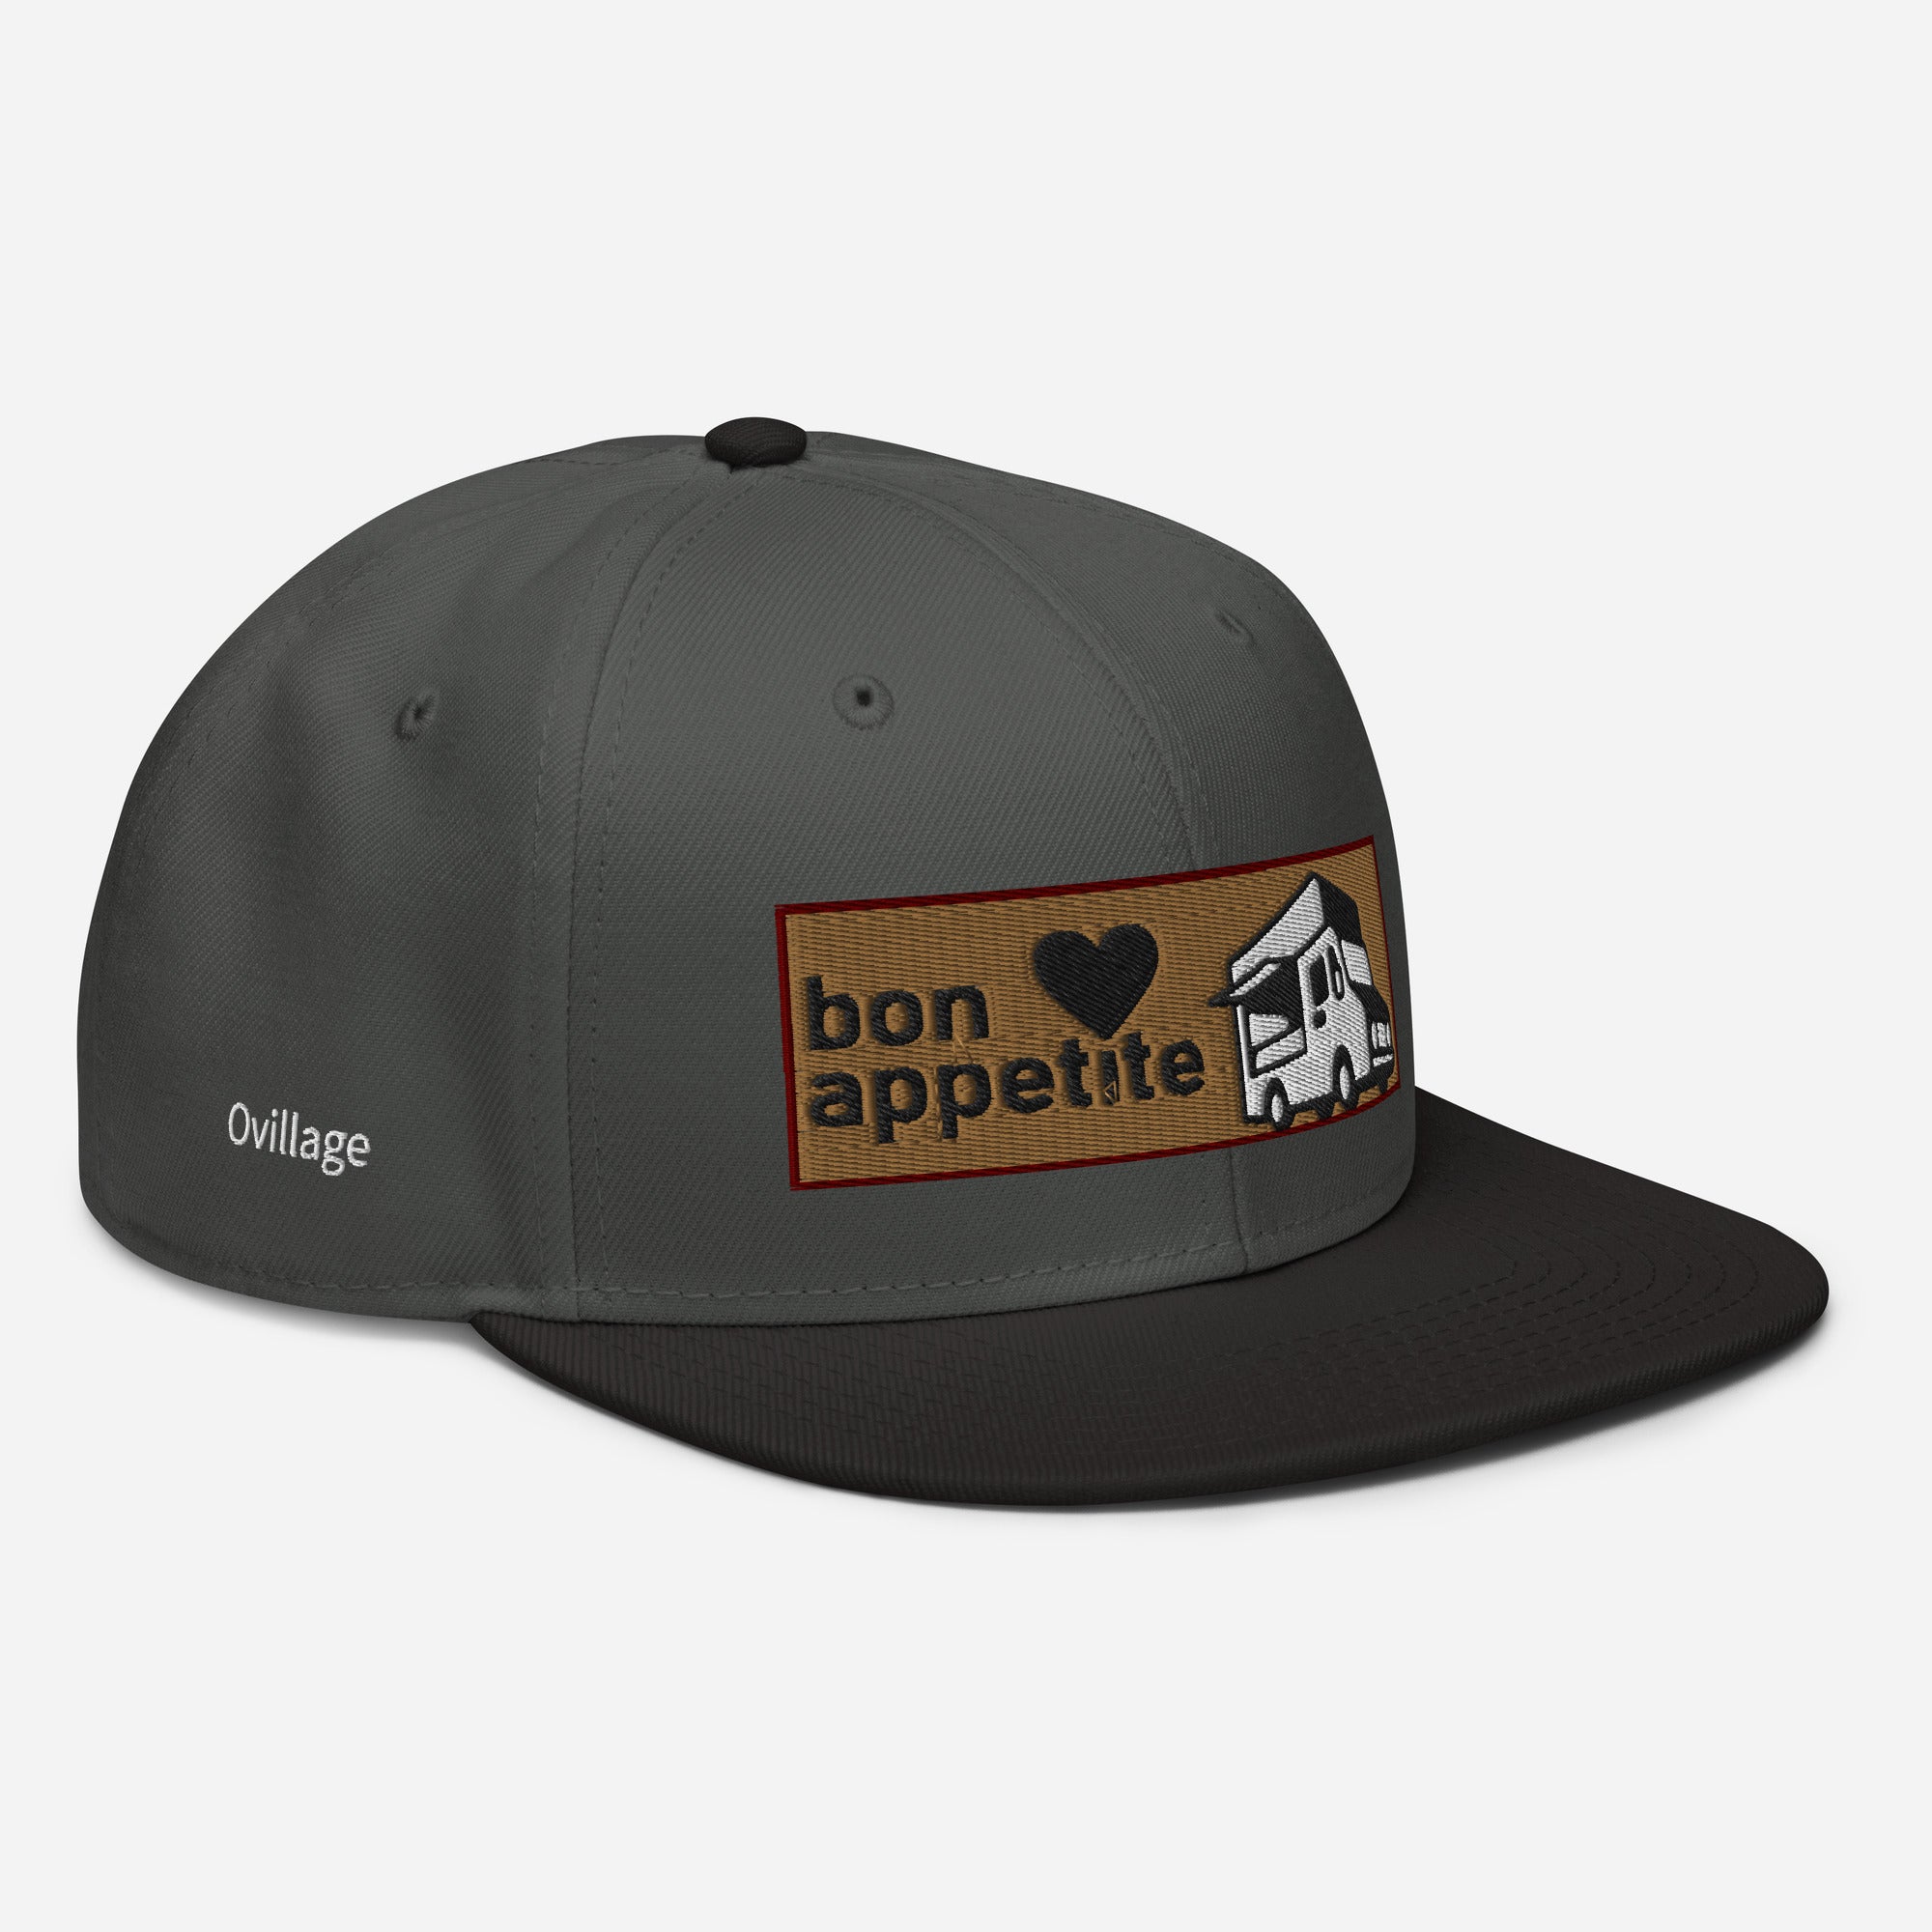 Snapback Cap [Bon appetit2] Black / Charcoal gray / Charcoal gray